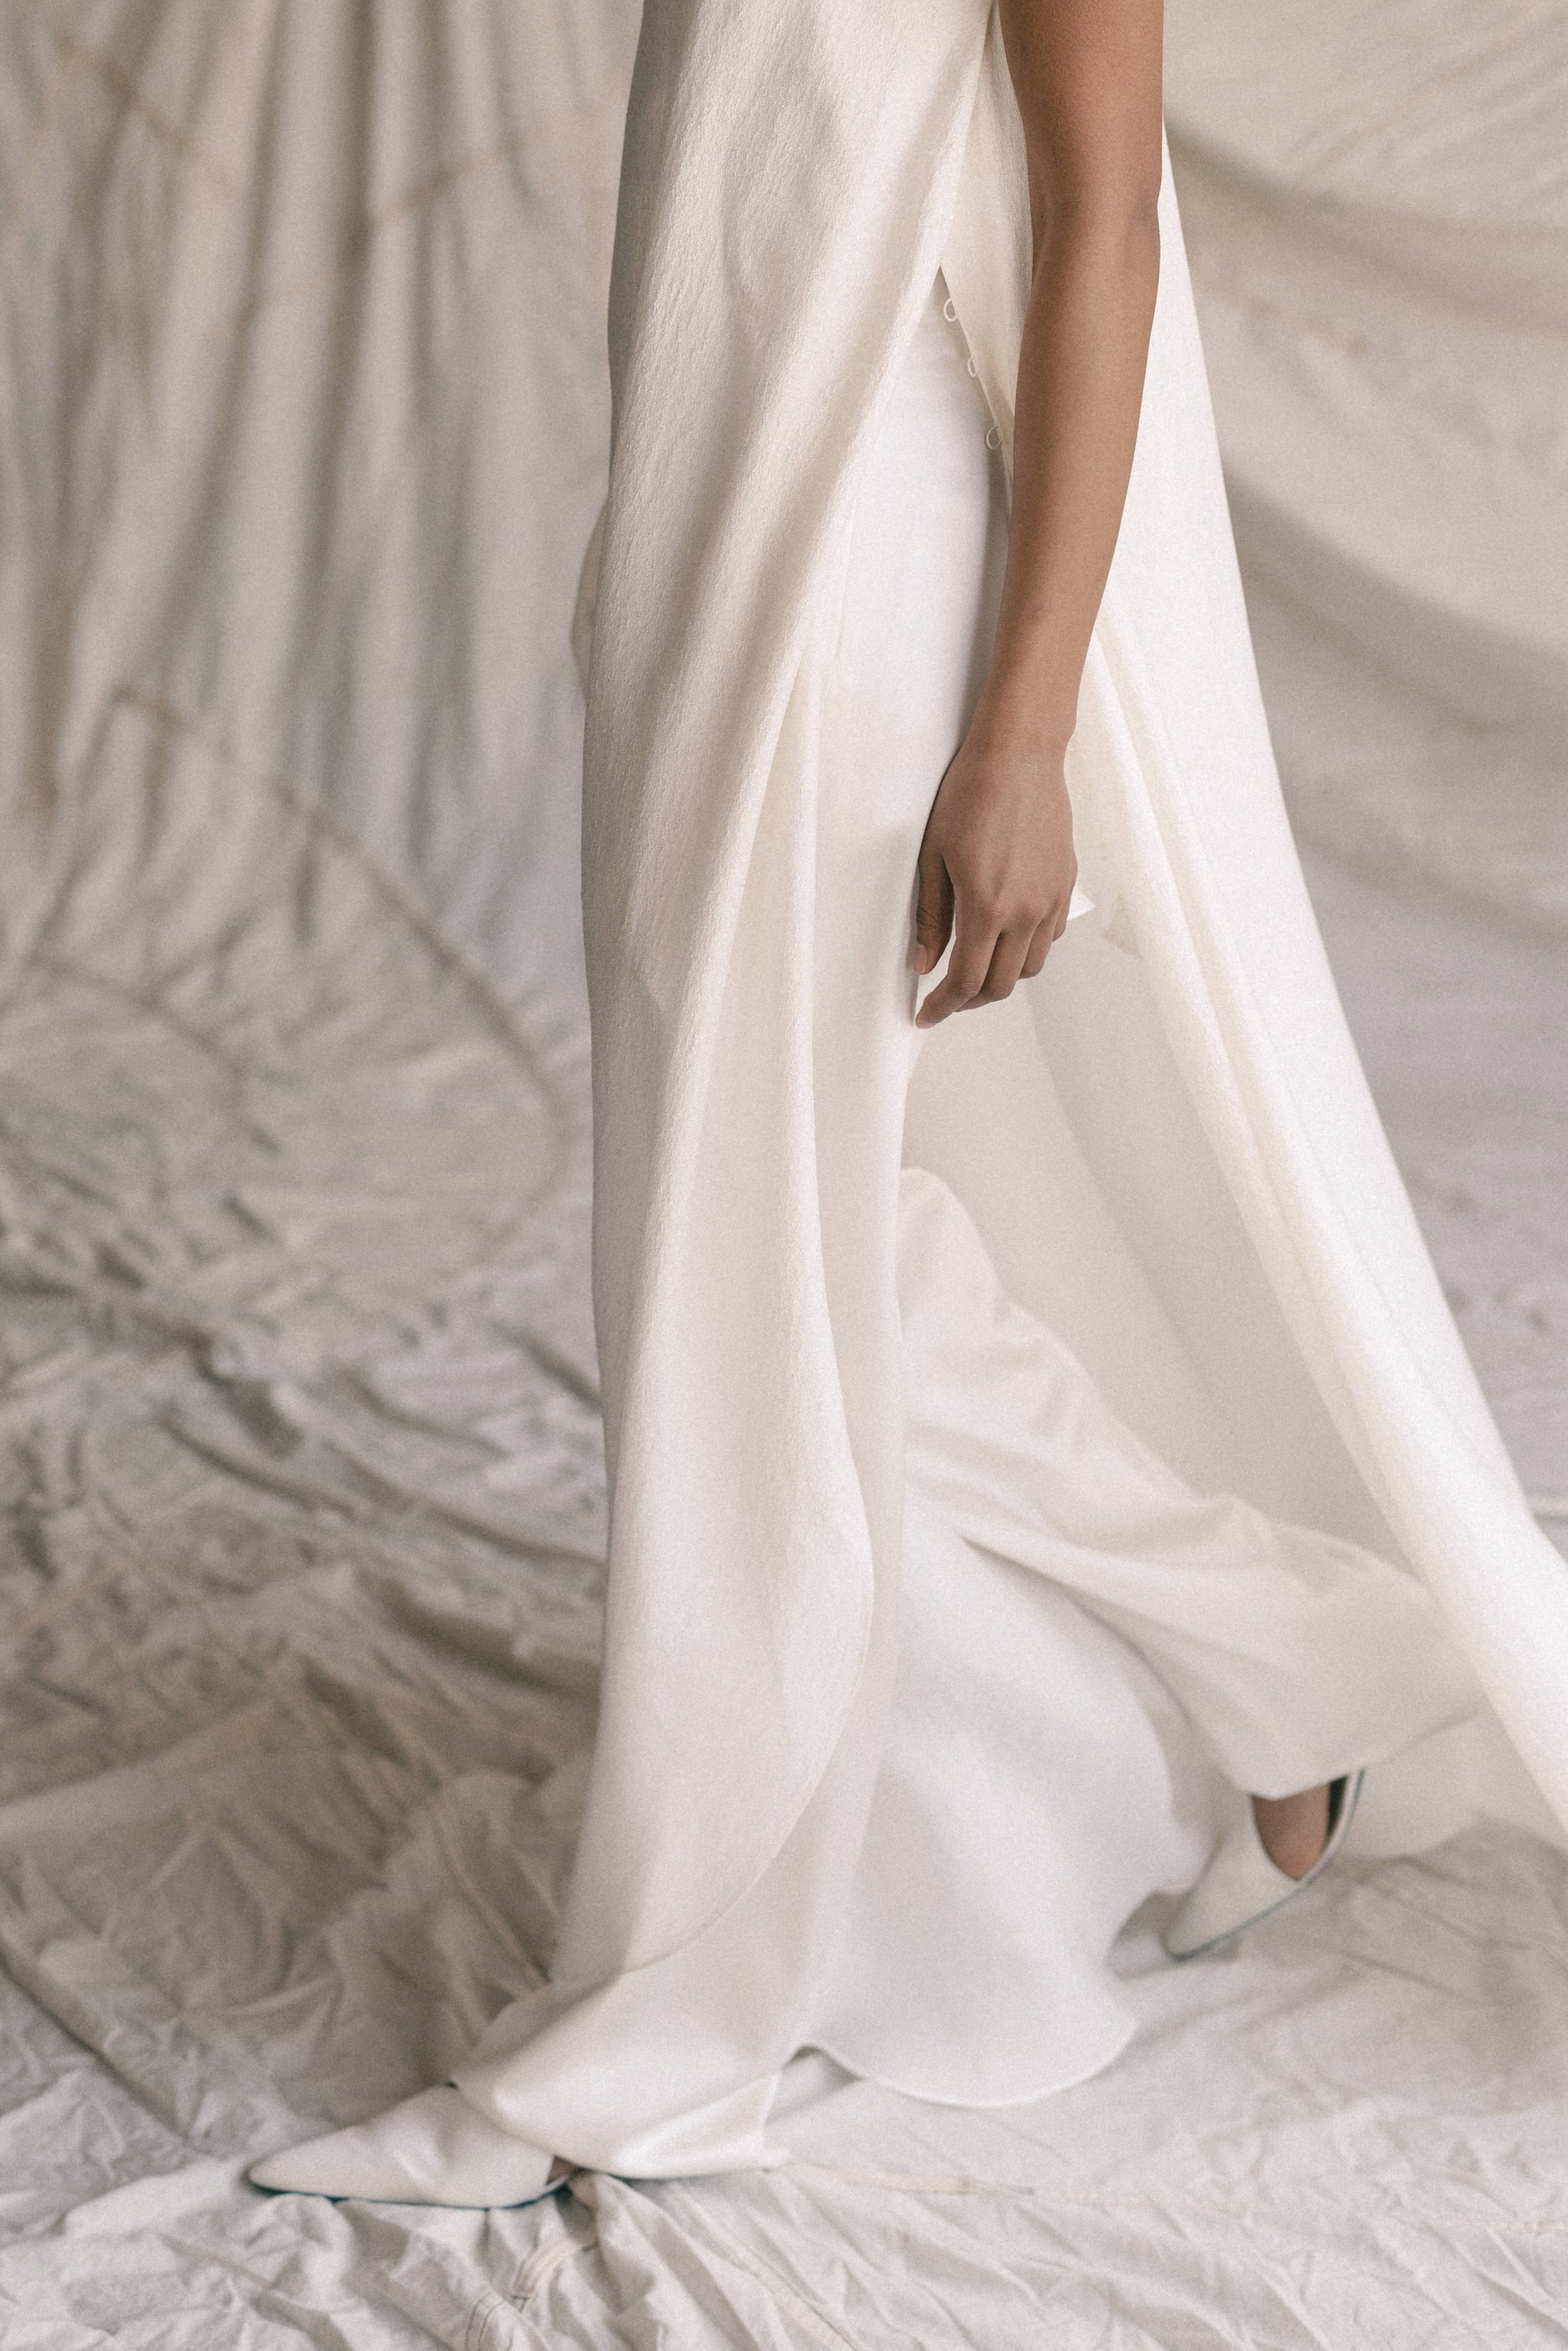  nordeen bridal sereia draped gown 